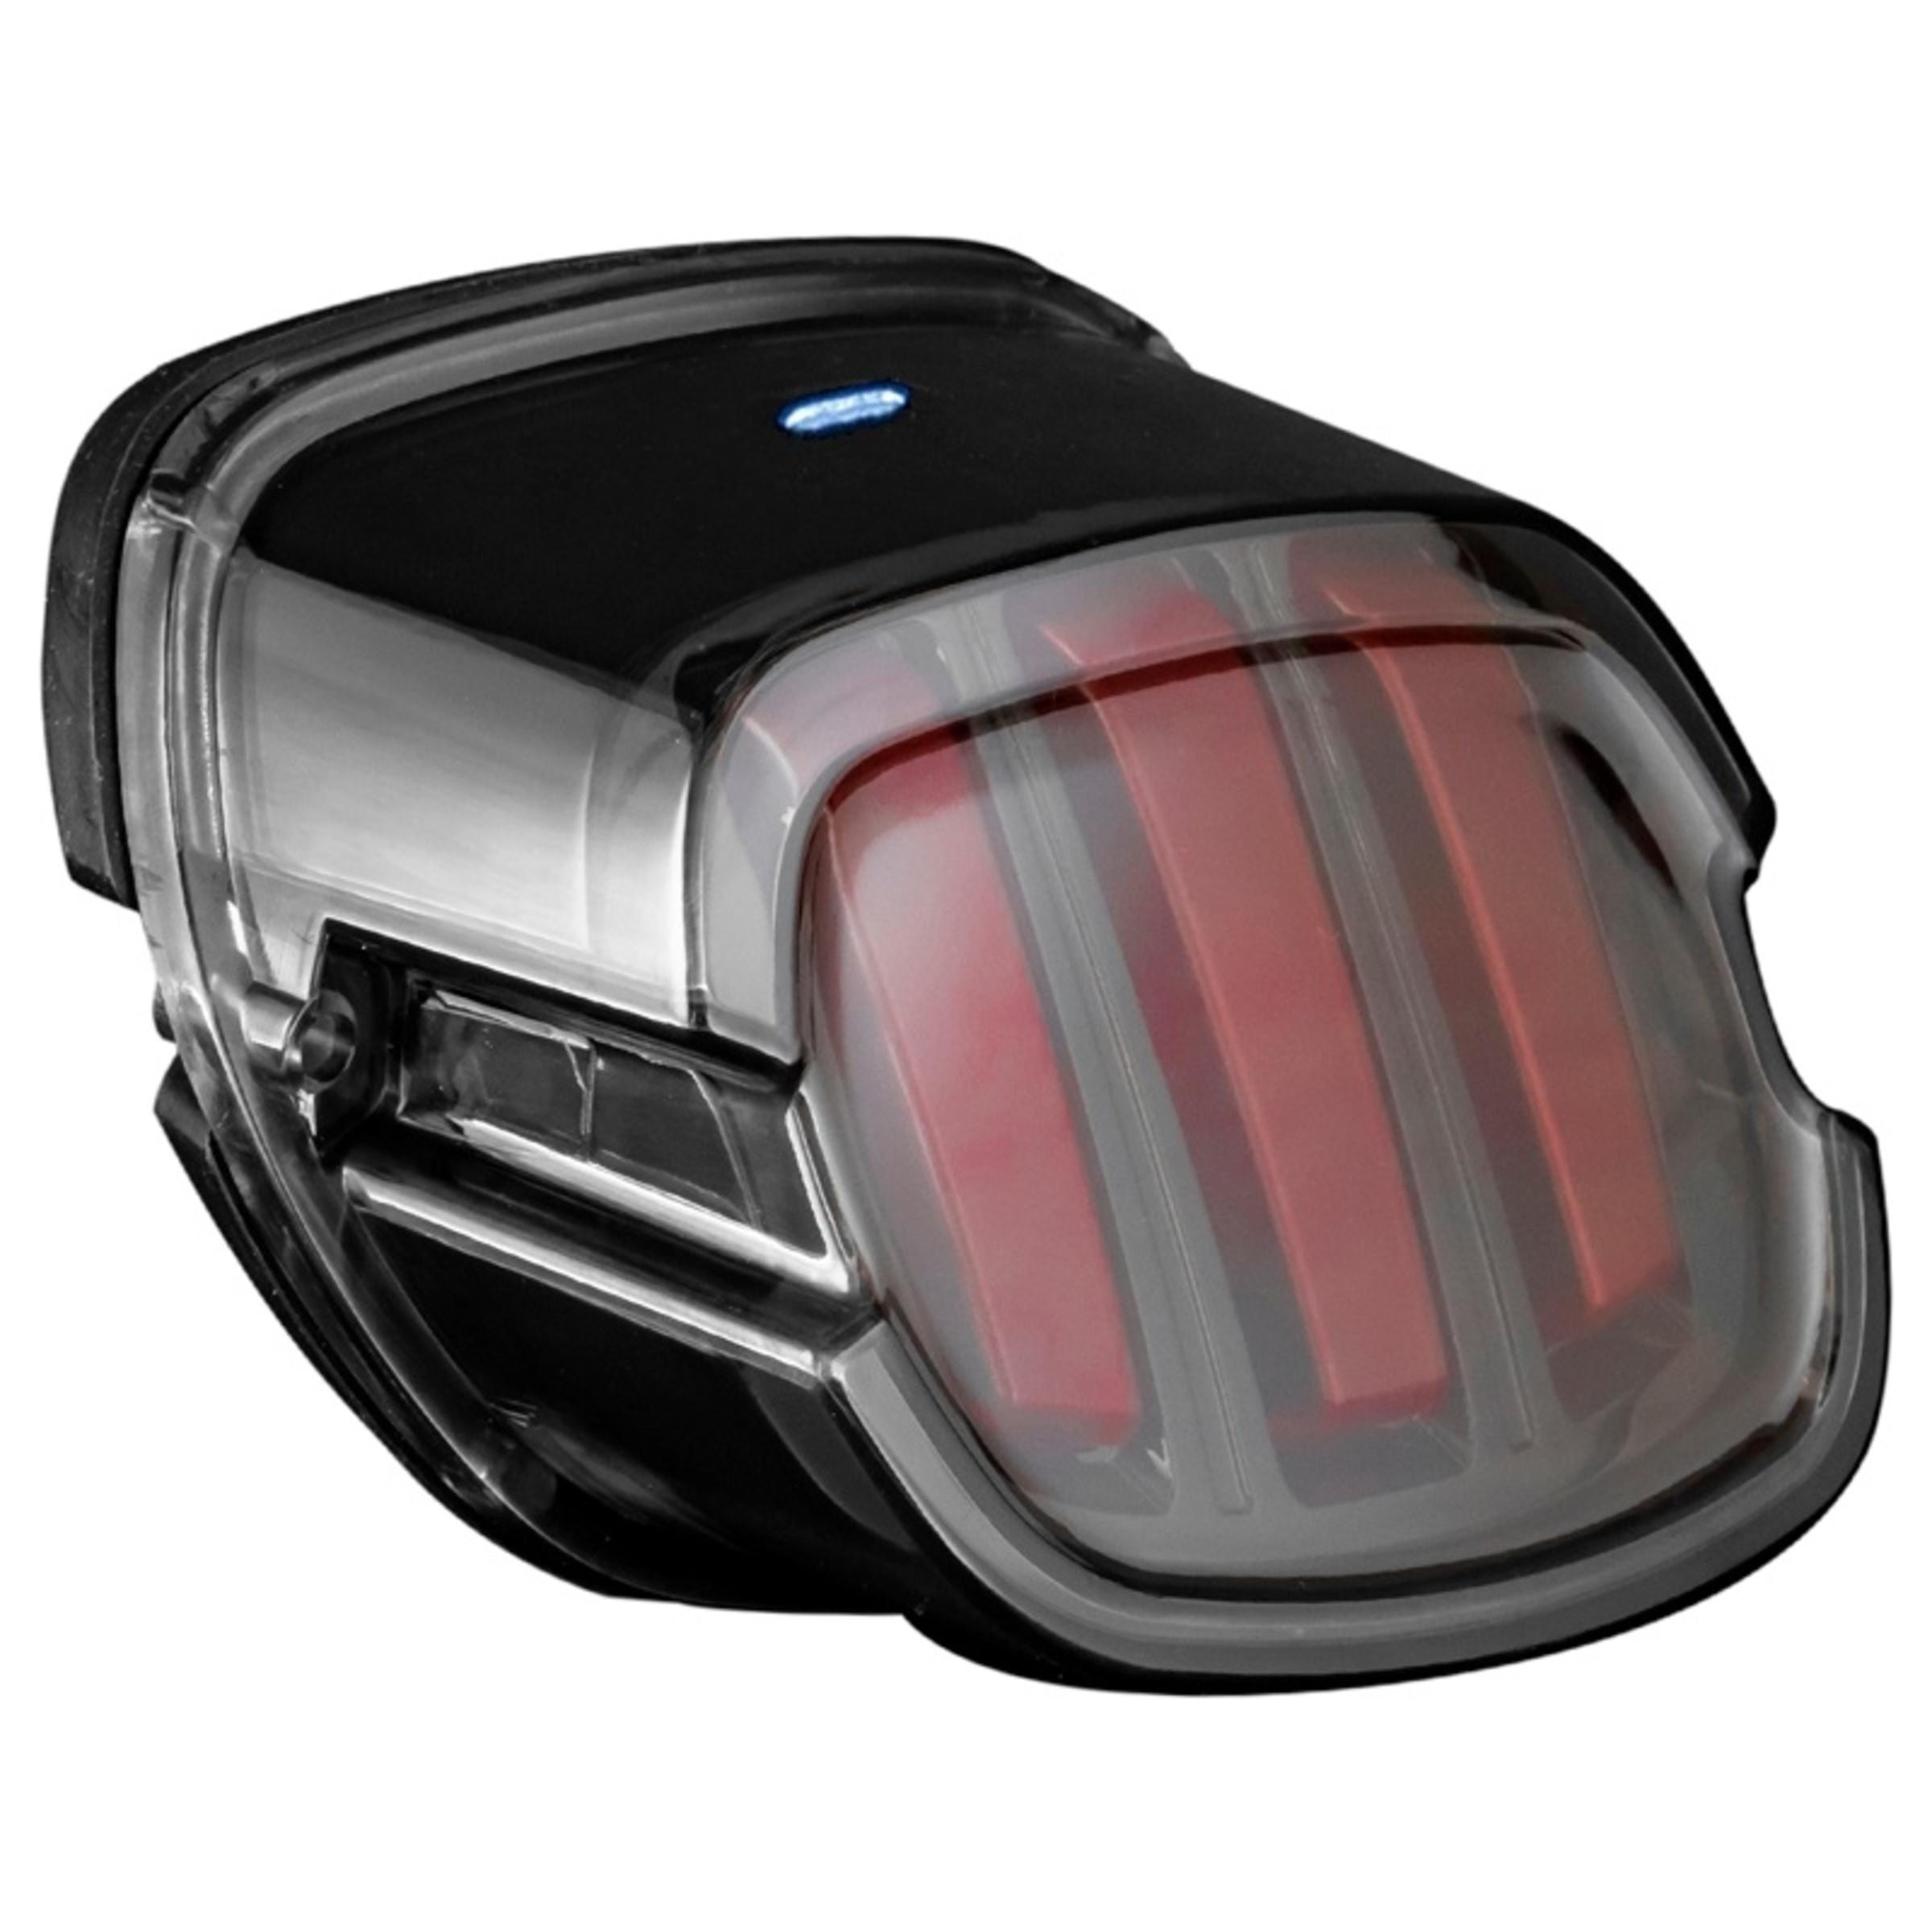 Featured image for “HOGWORKZ® BLACK Ignitez LED Taillight w/ Plate Light”